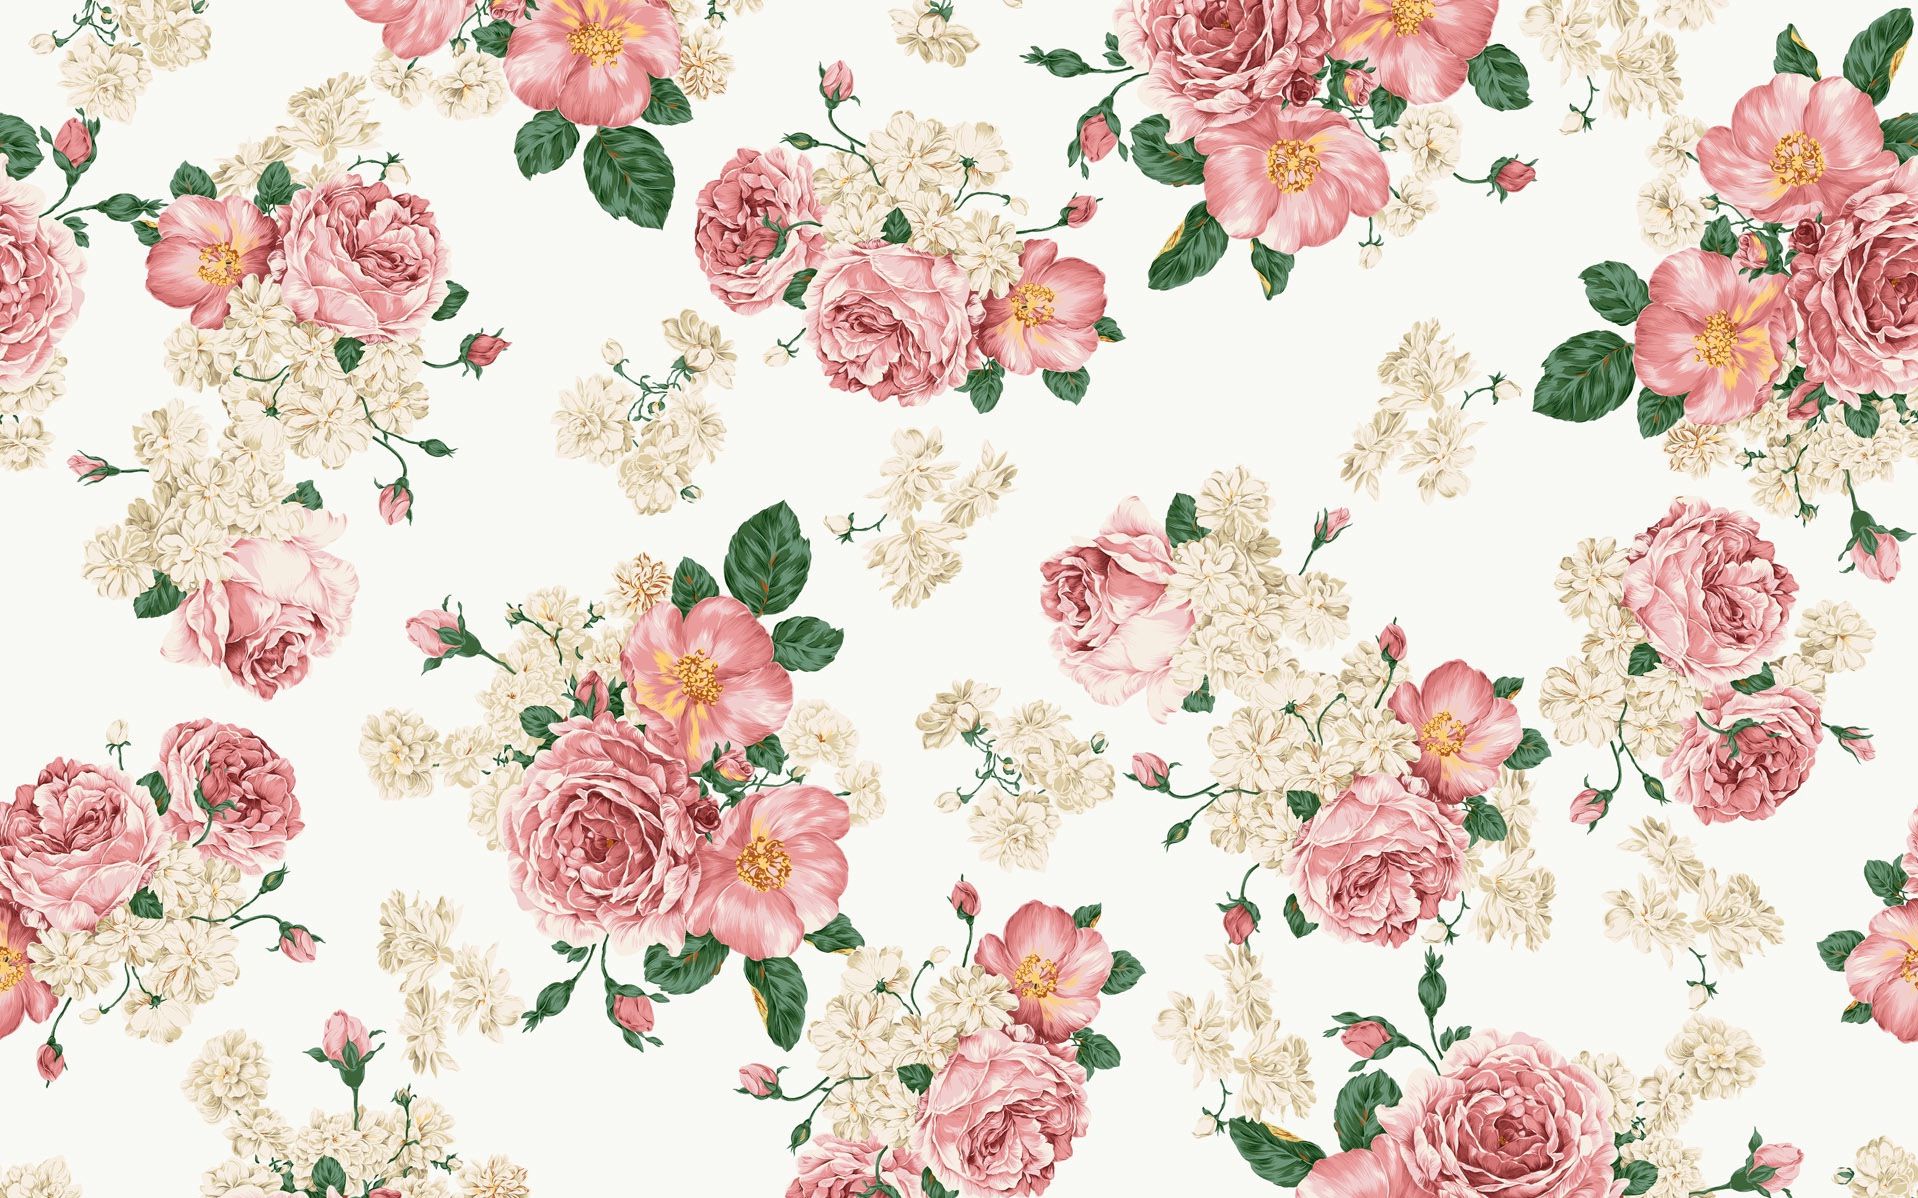 Flower Wallpaper Tumblr Hd 1080p 12 Hd Wallpaper. MARAVILLOSA VIDA HORRIBLE